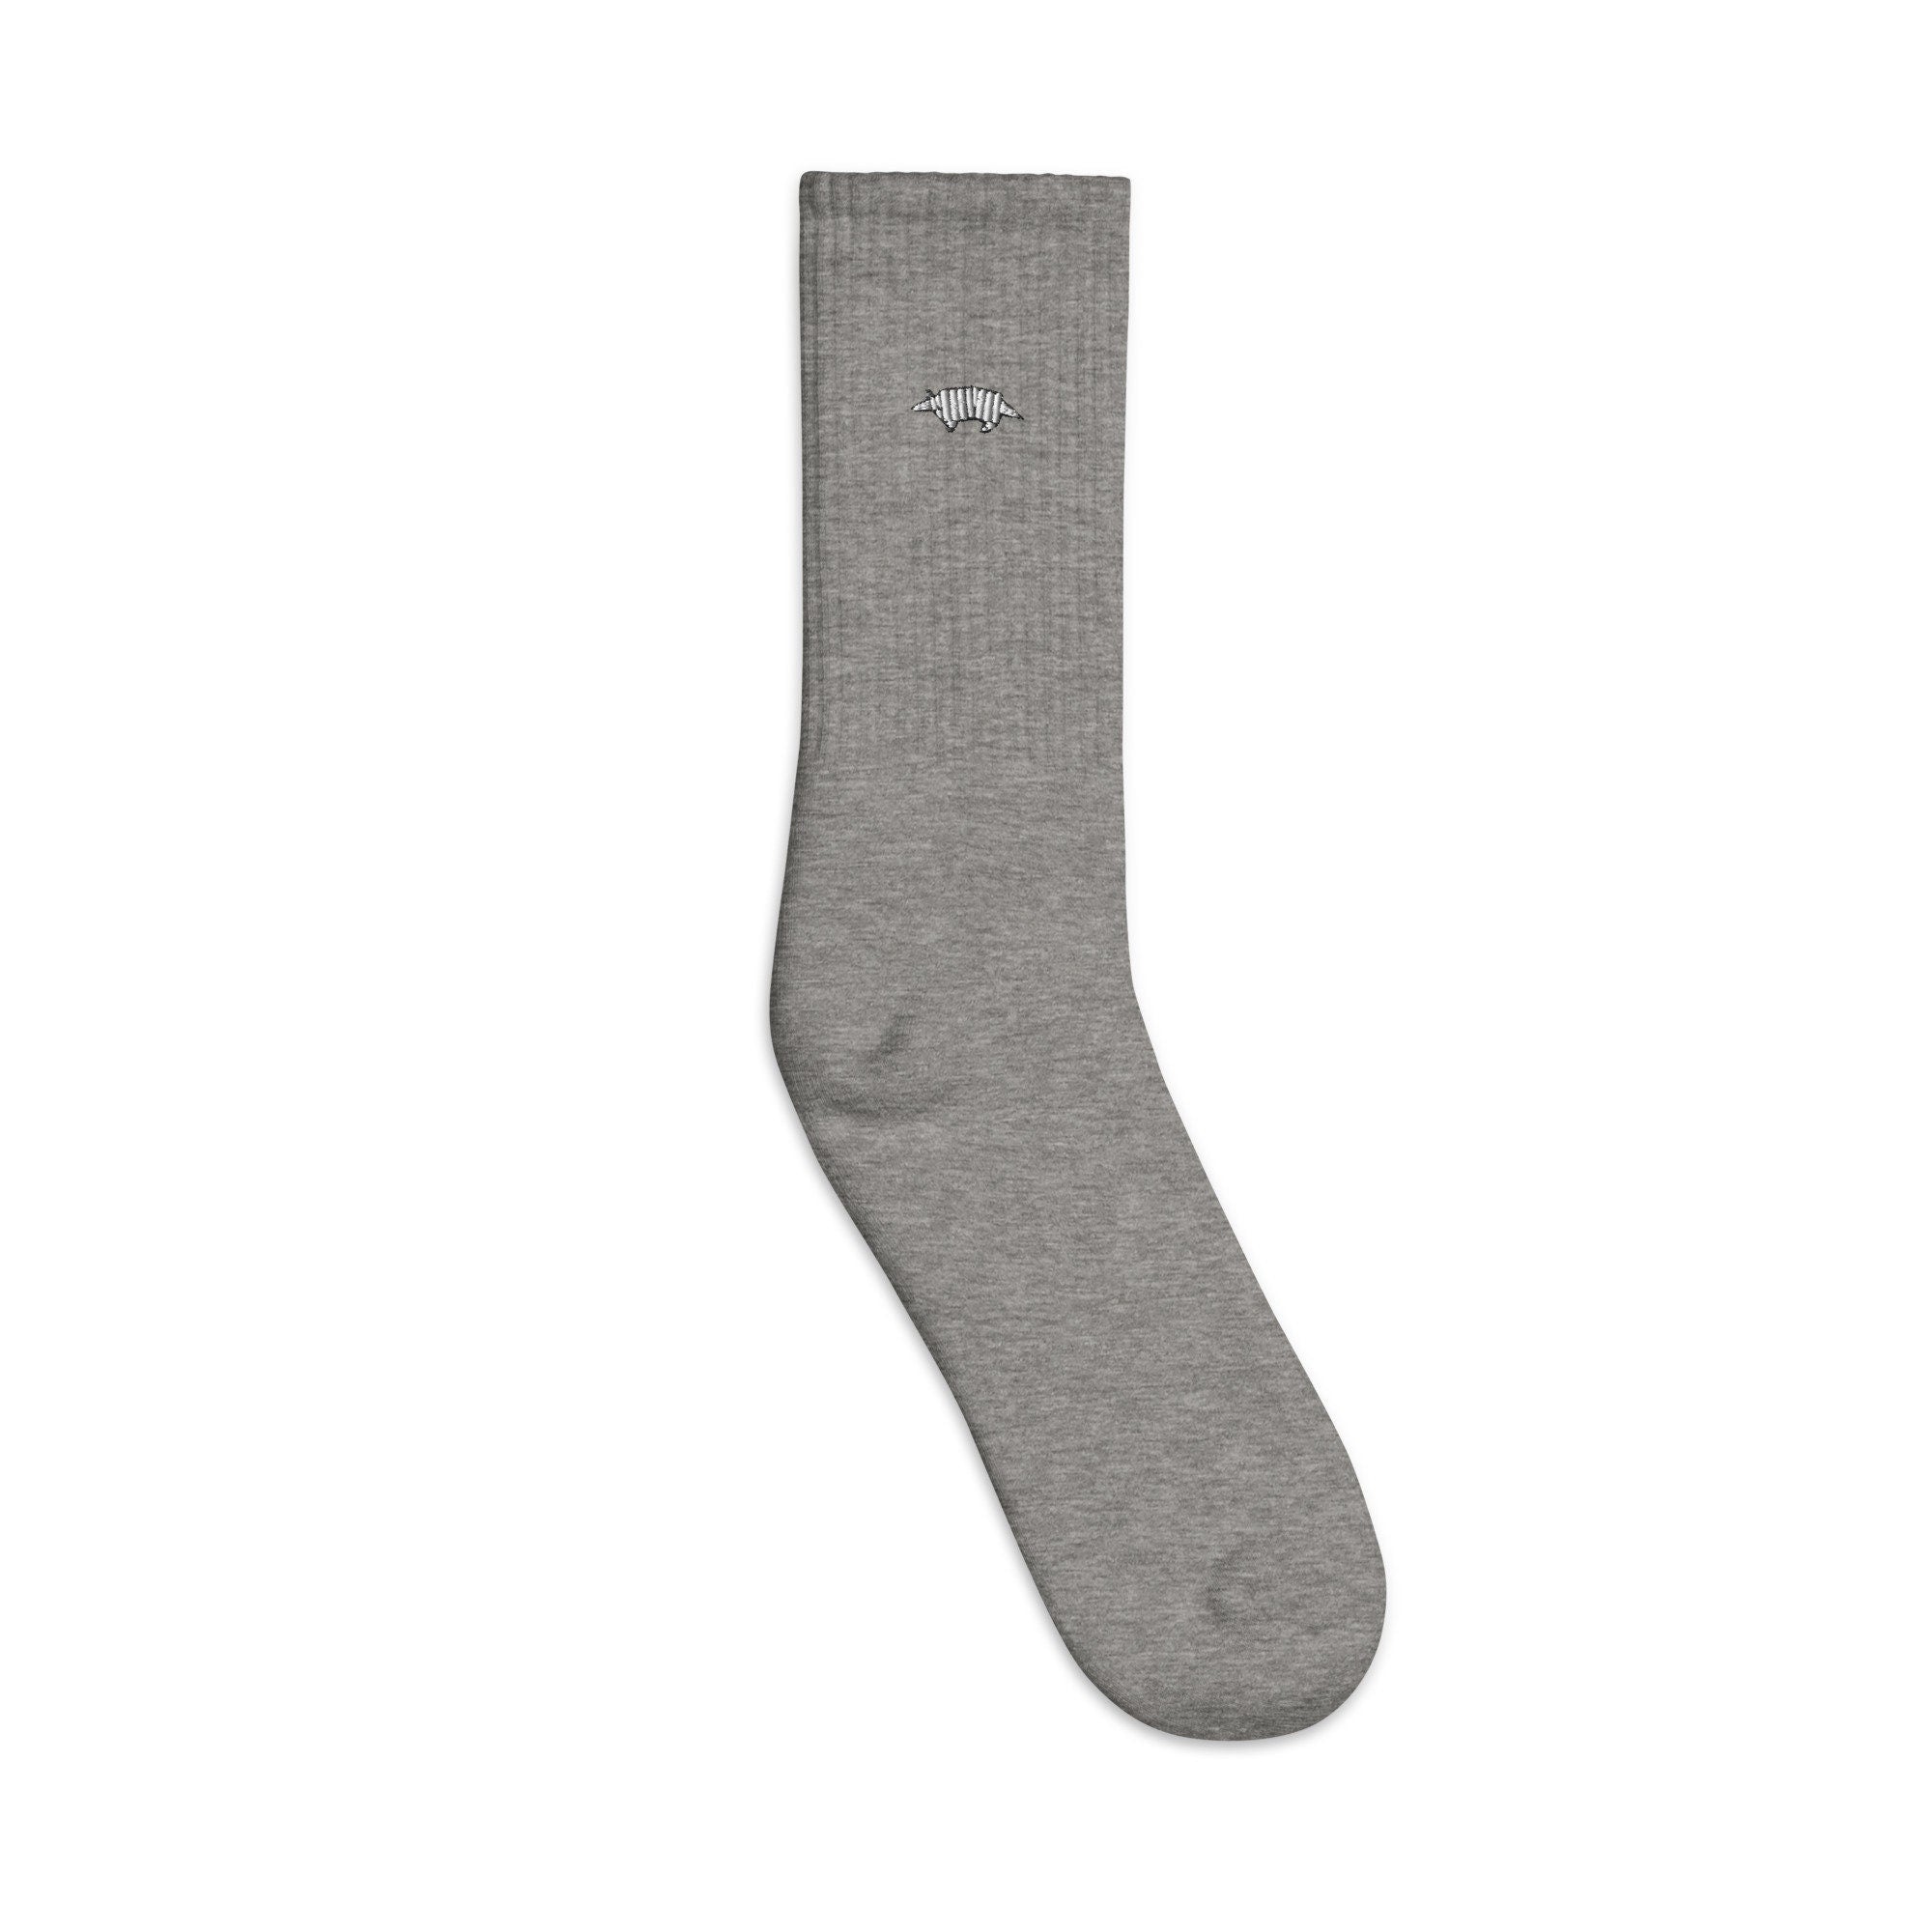 Armadillo Embroidered Socks, Premium Embroidered Socks, Long Socks Gift - Multiple Colors